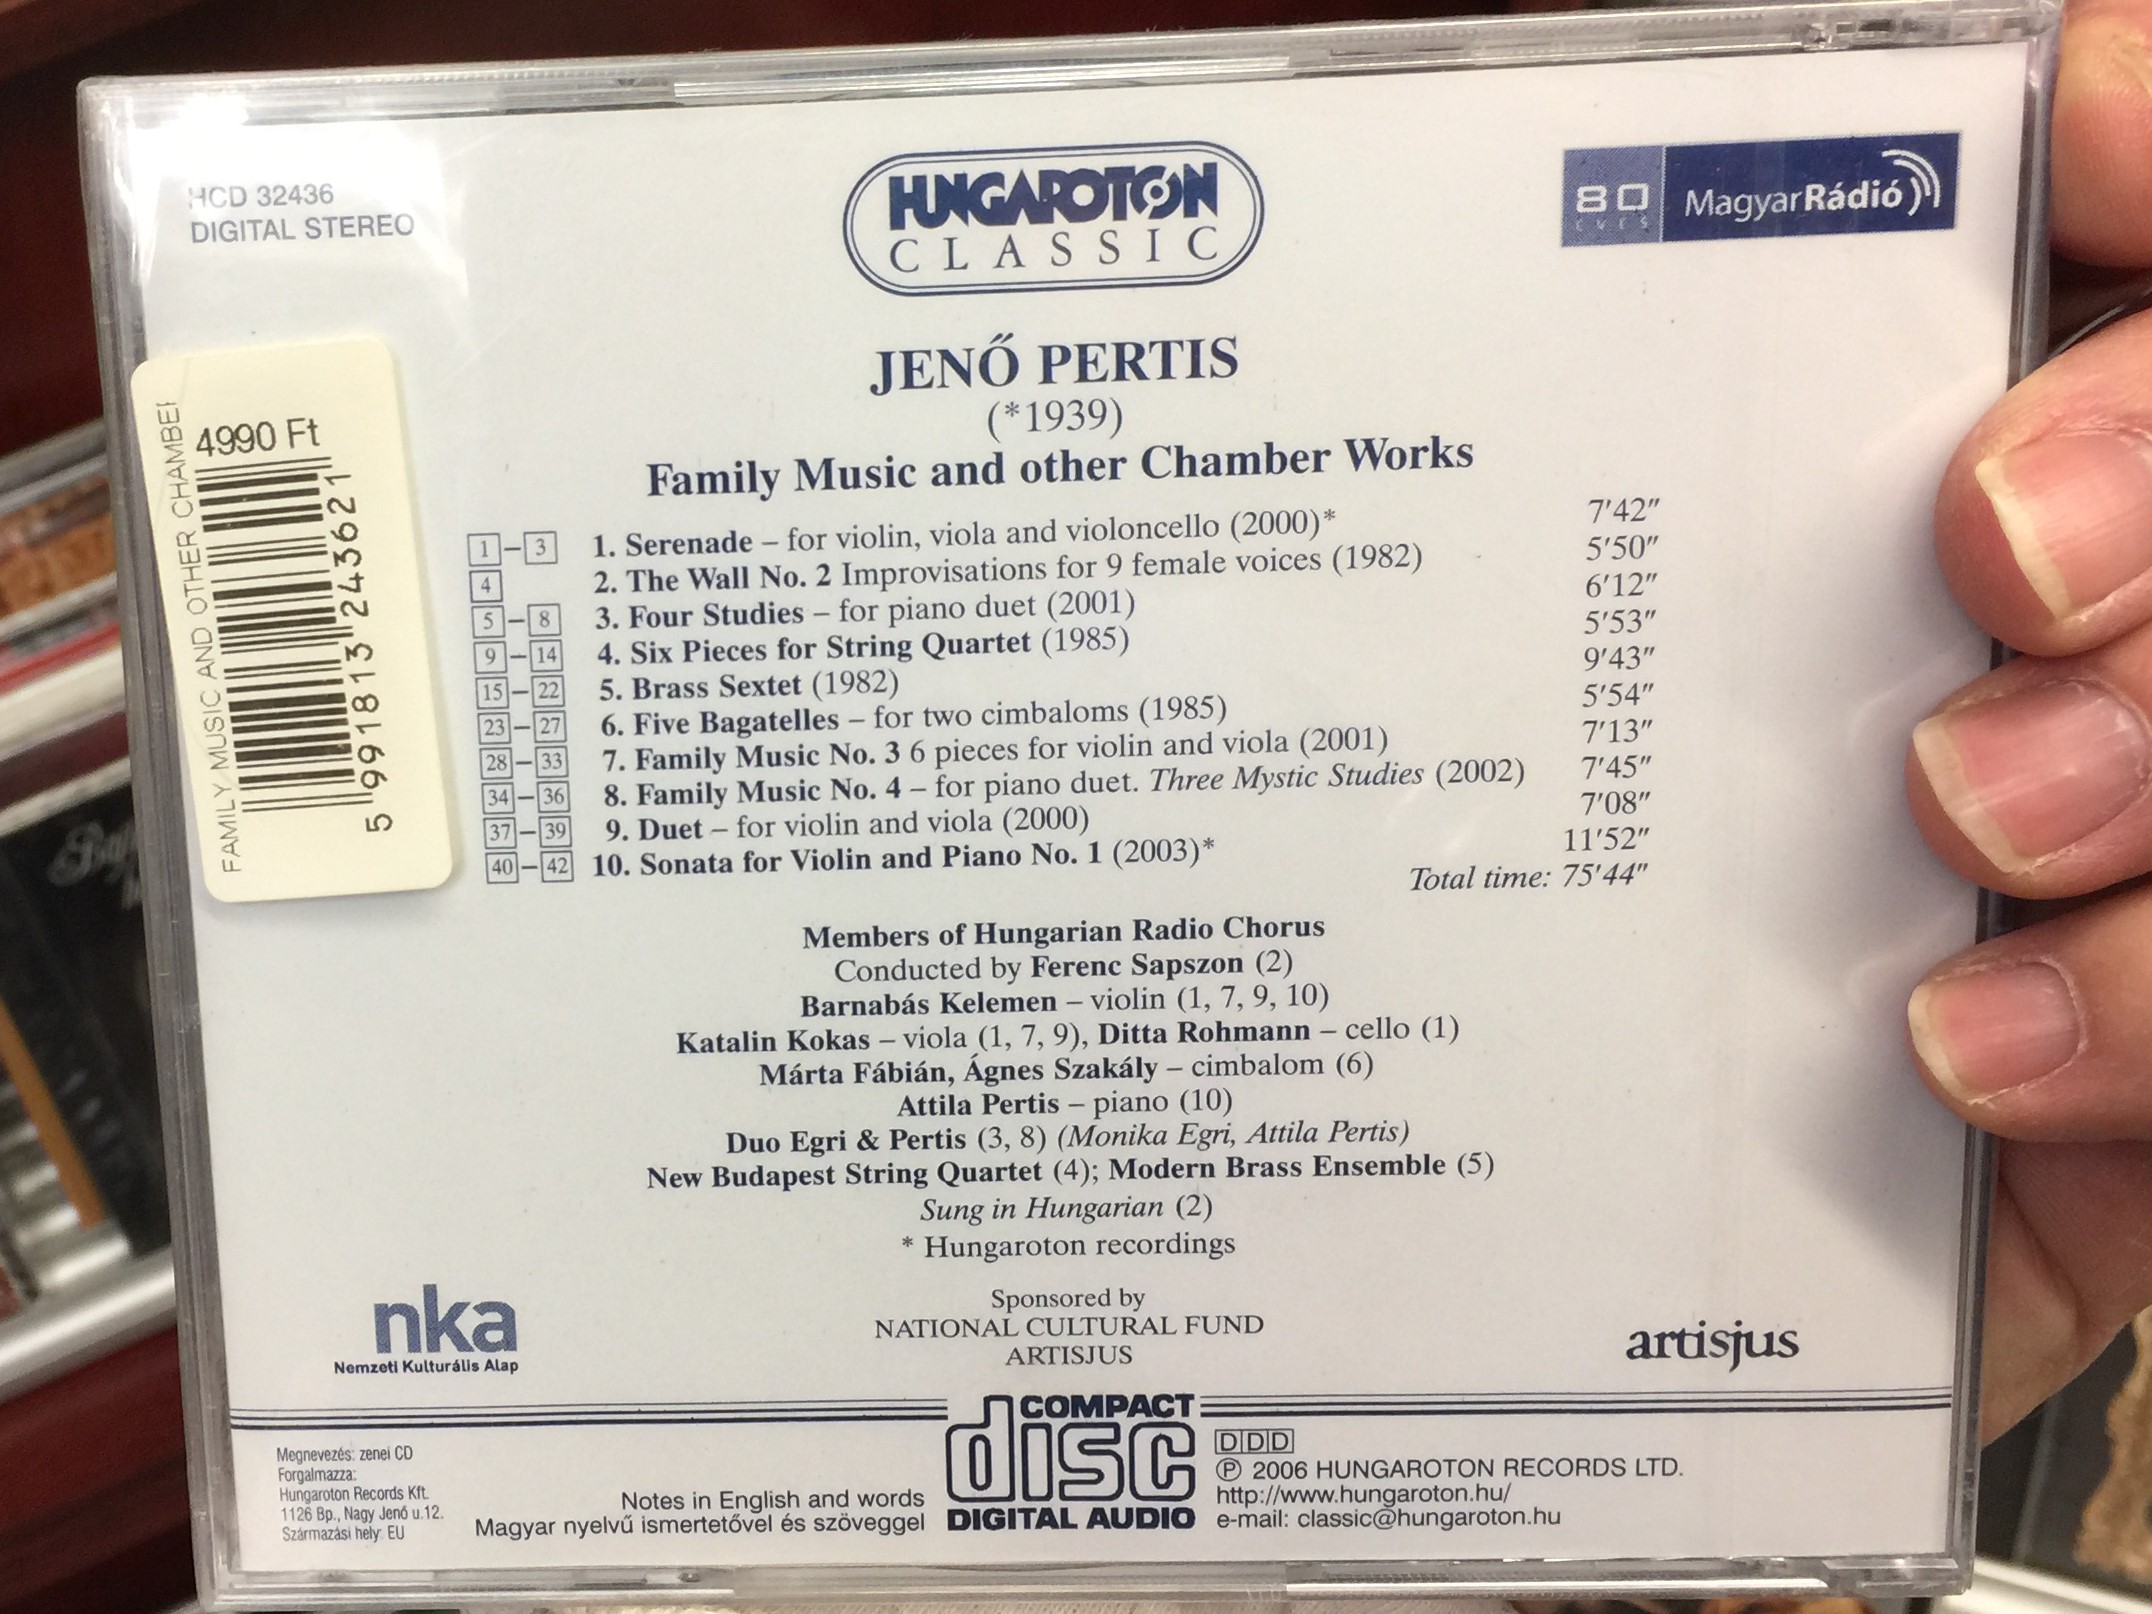 jen-pertis-family-music-and-other-chamber-works-hungaroton-classic-audio-cd-2006-stereo-hcd-32436-2-.jpg